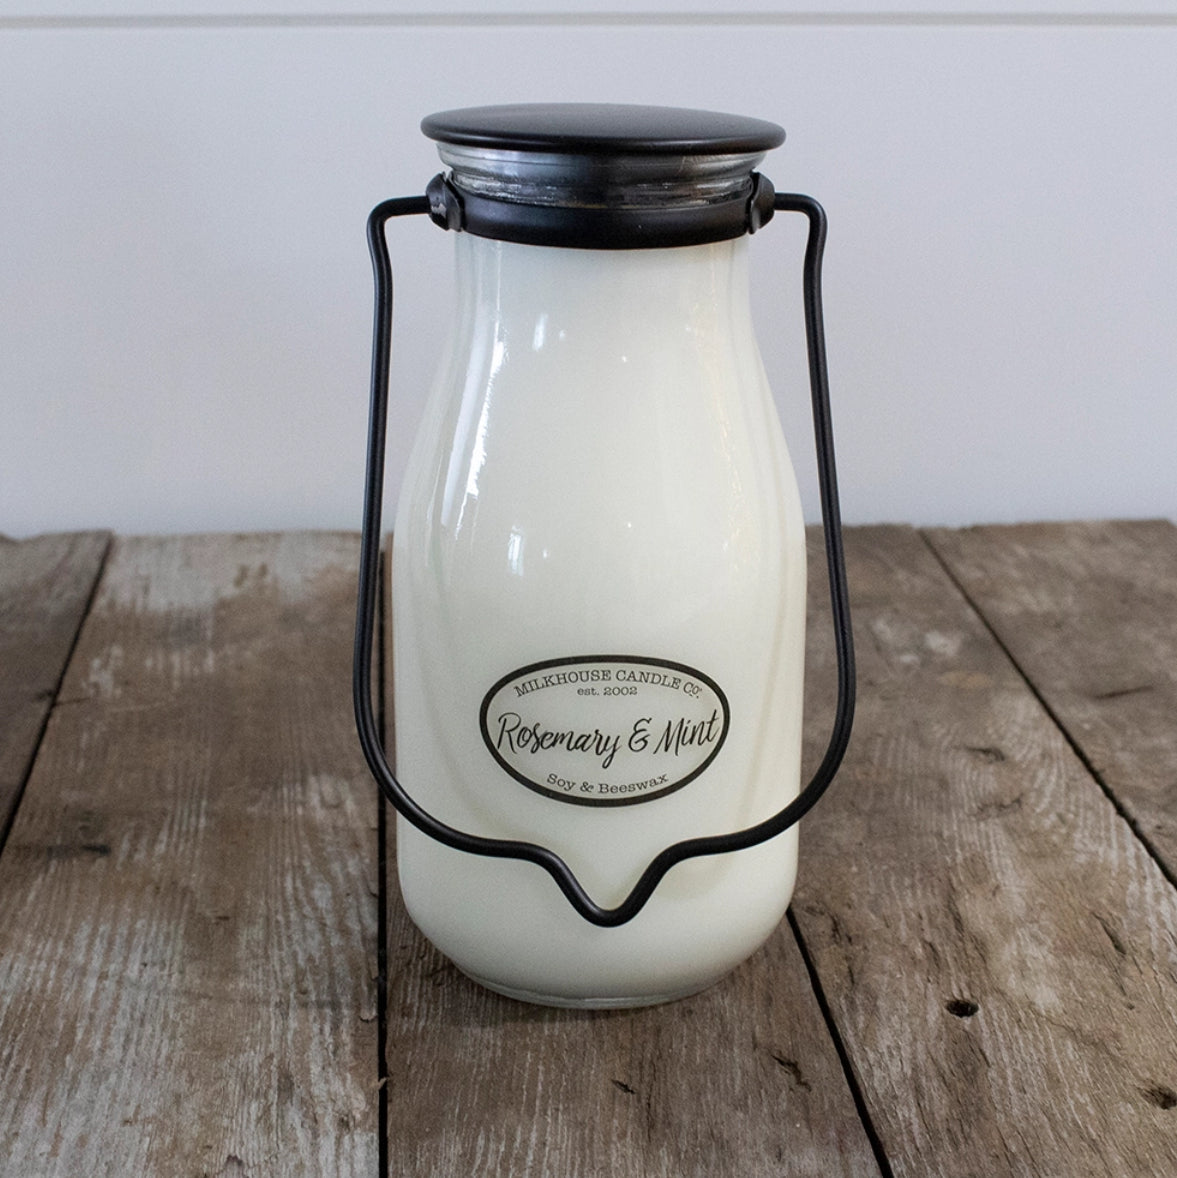 Saltwater Mist butter glow jar 16 oz Milkhouse candle